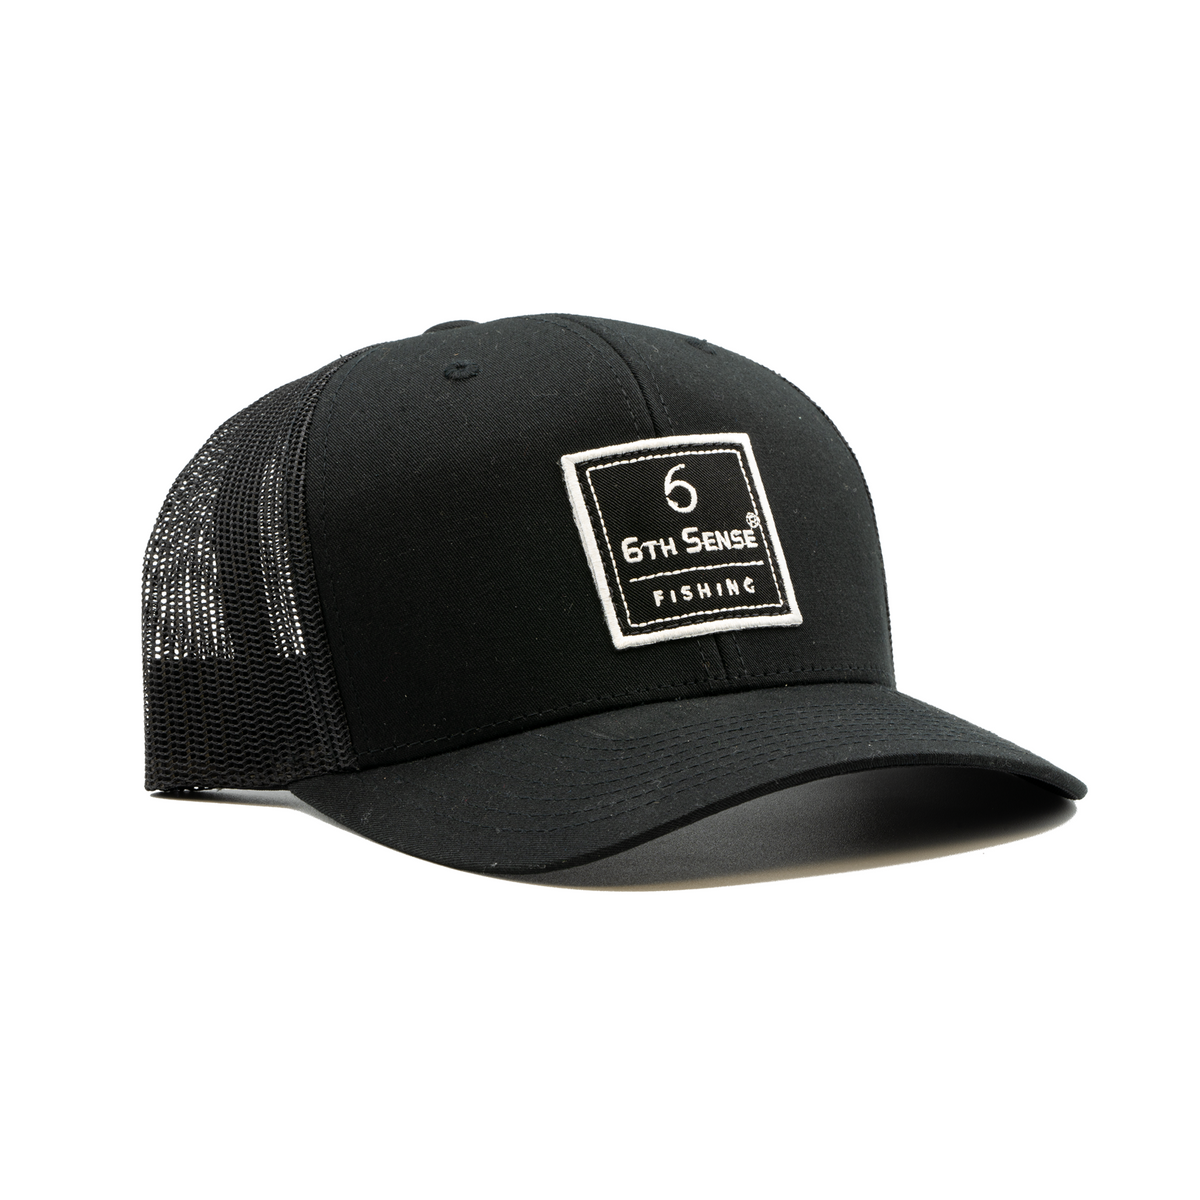 6th Sense Fishing - Premium Hats - Bold Statement - Black